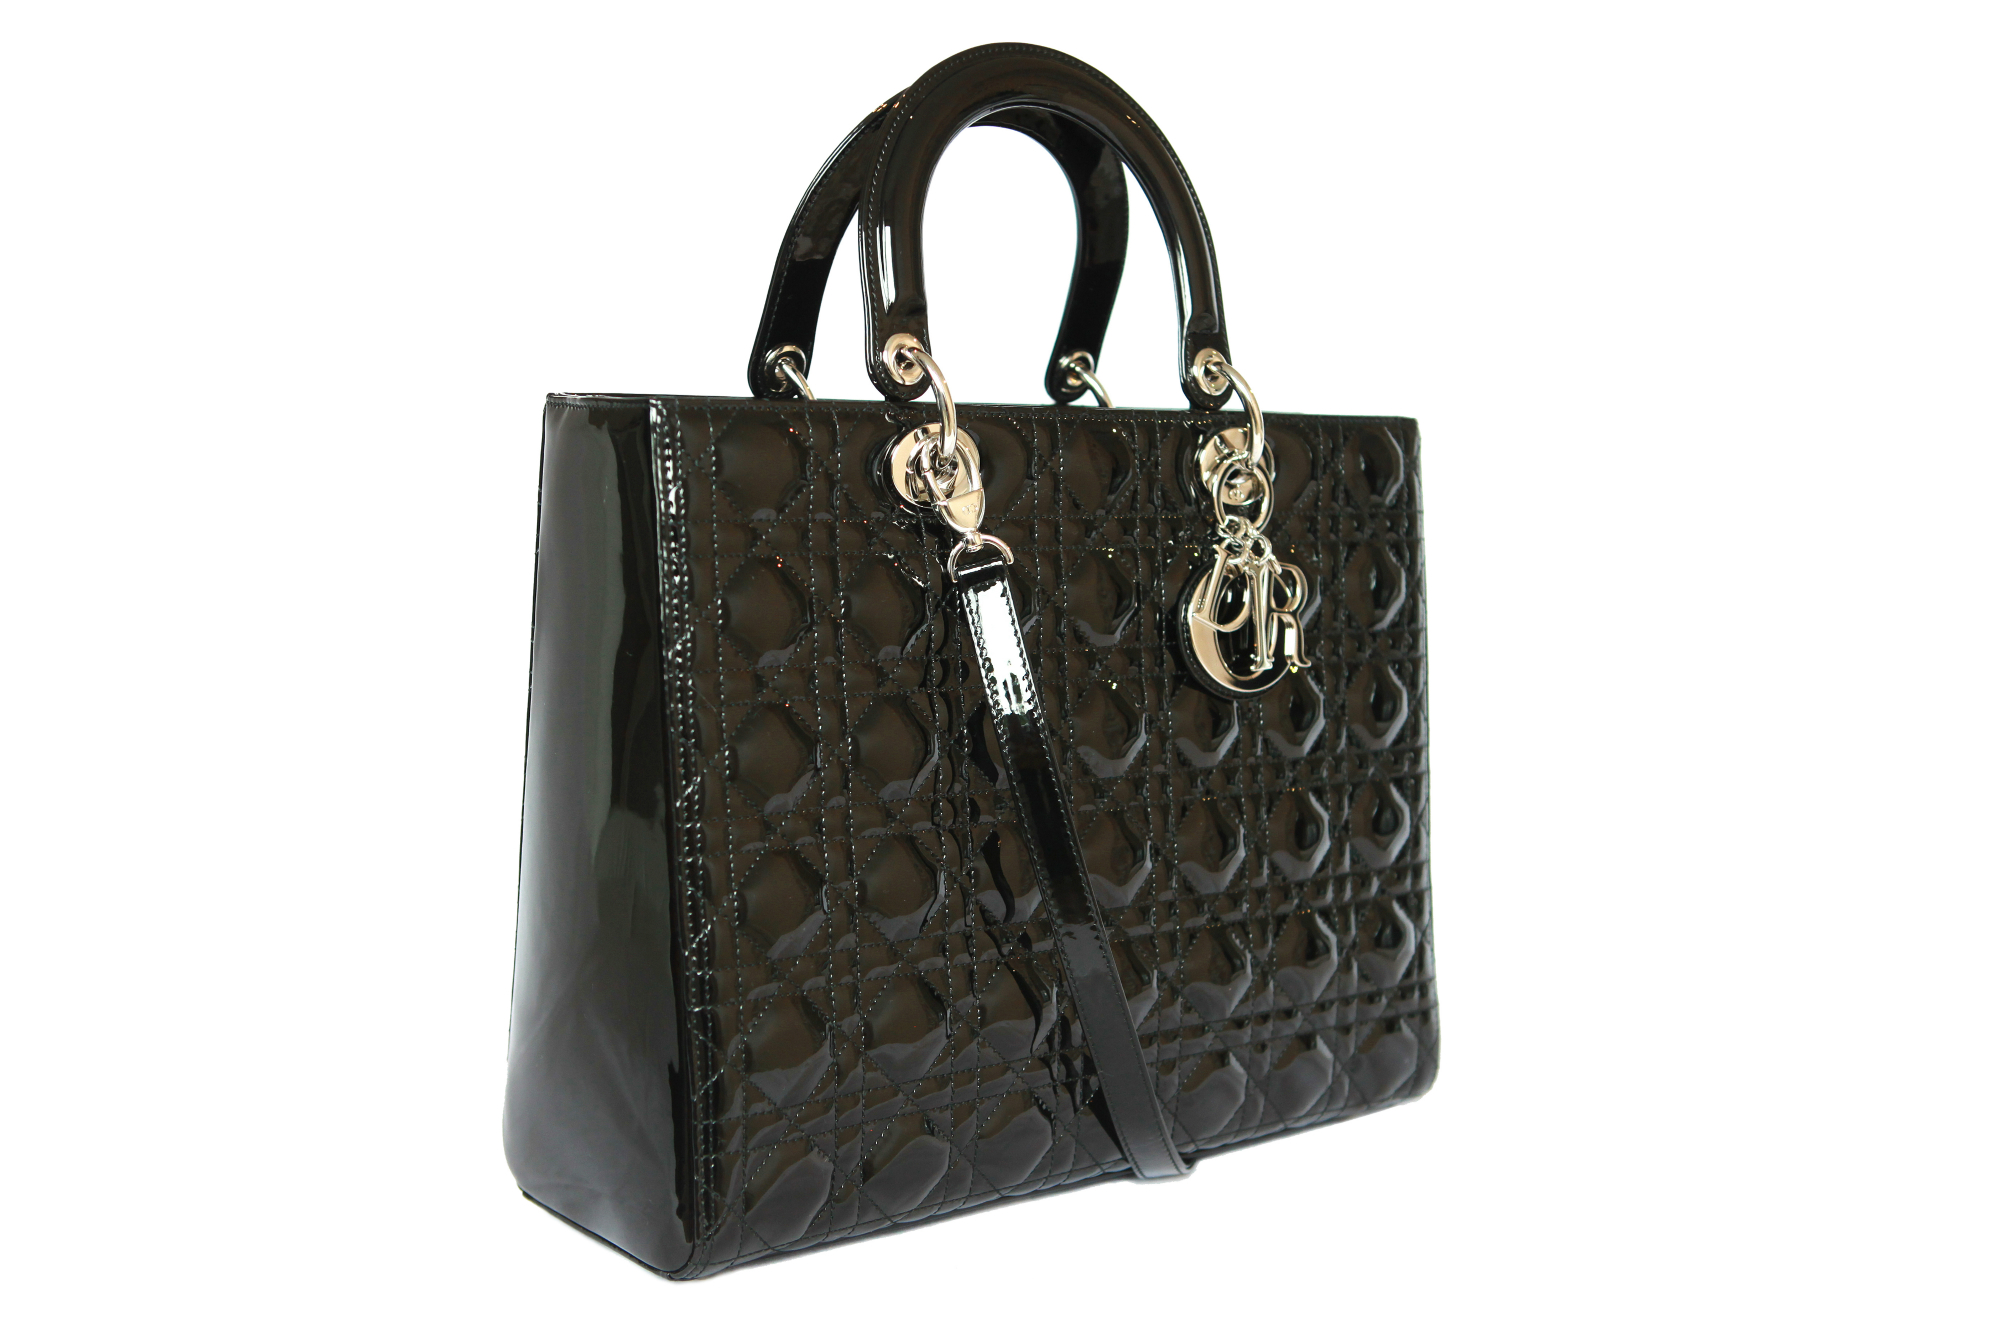 Hire a Lady Dior handbag and other designer handbags | Elite Couture